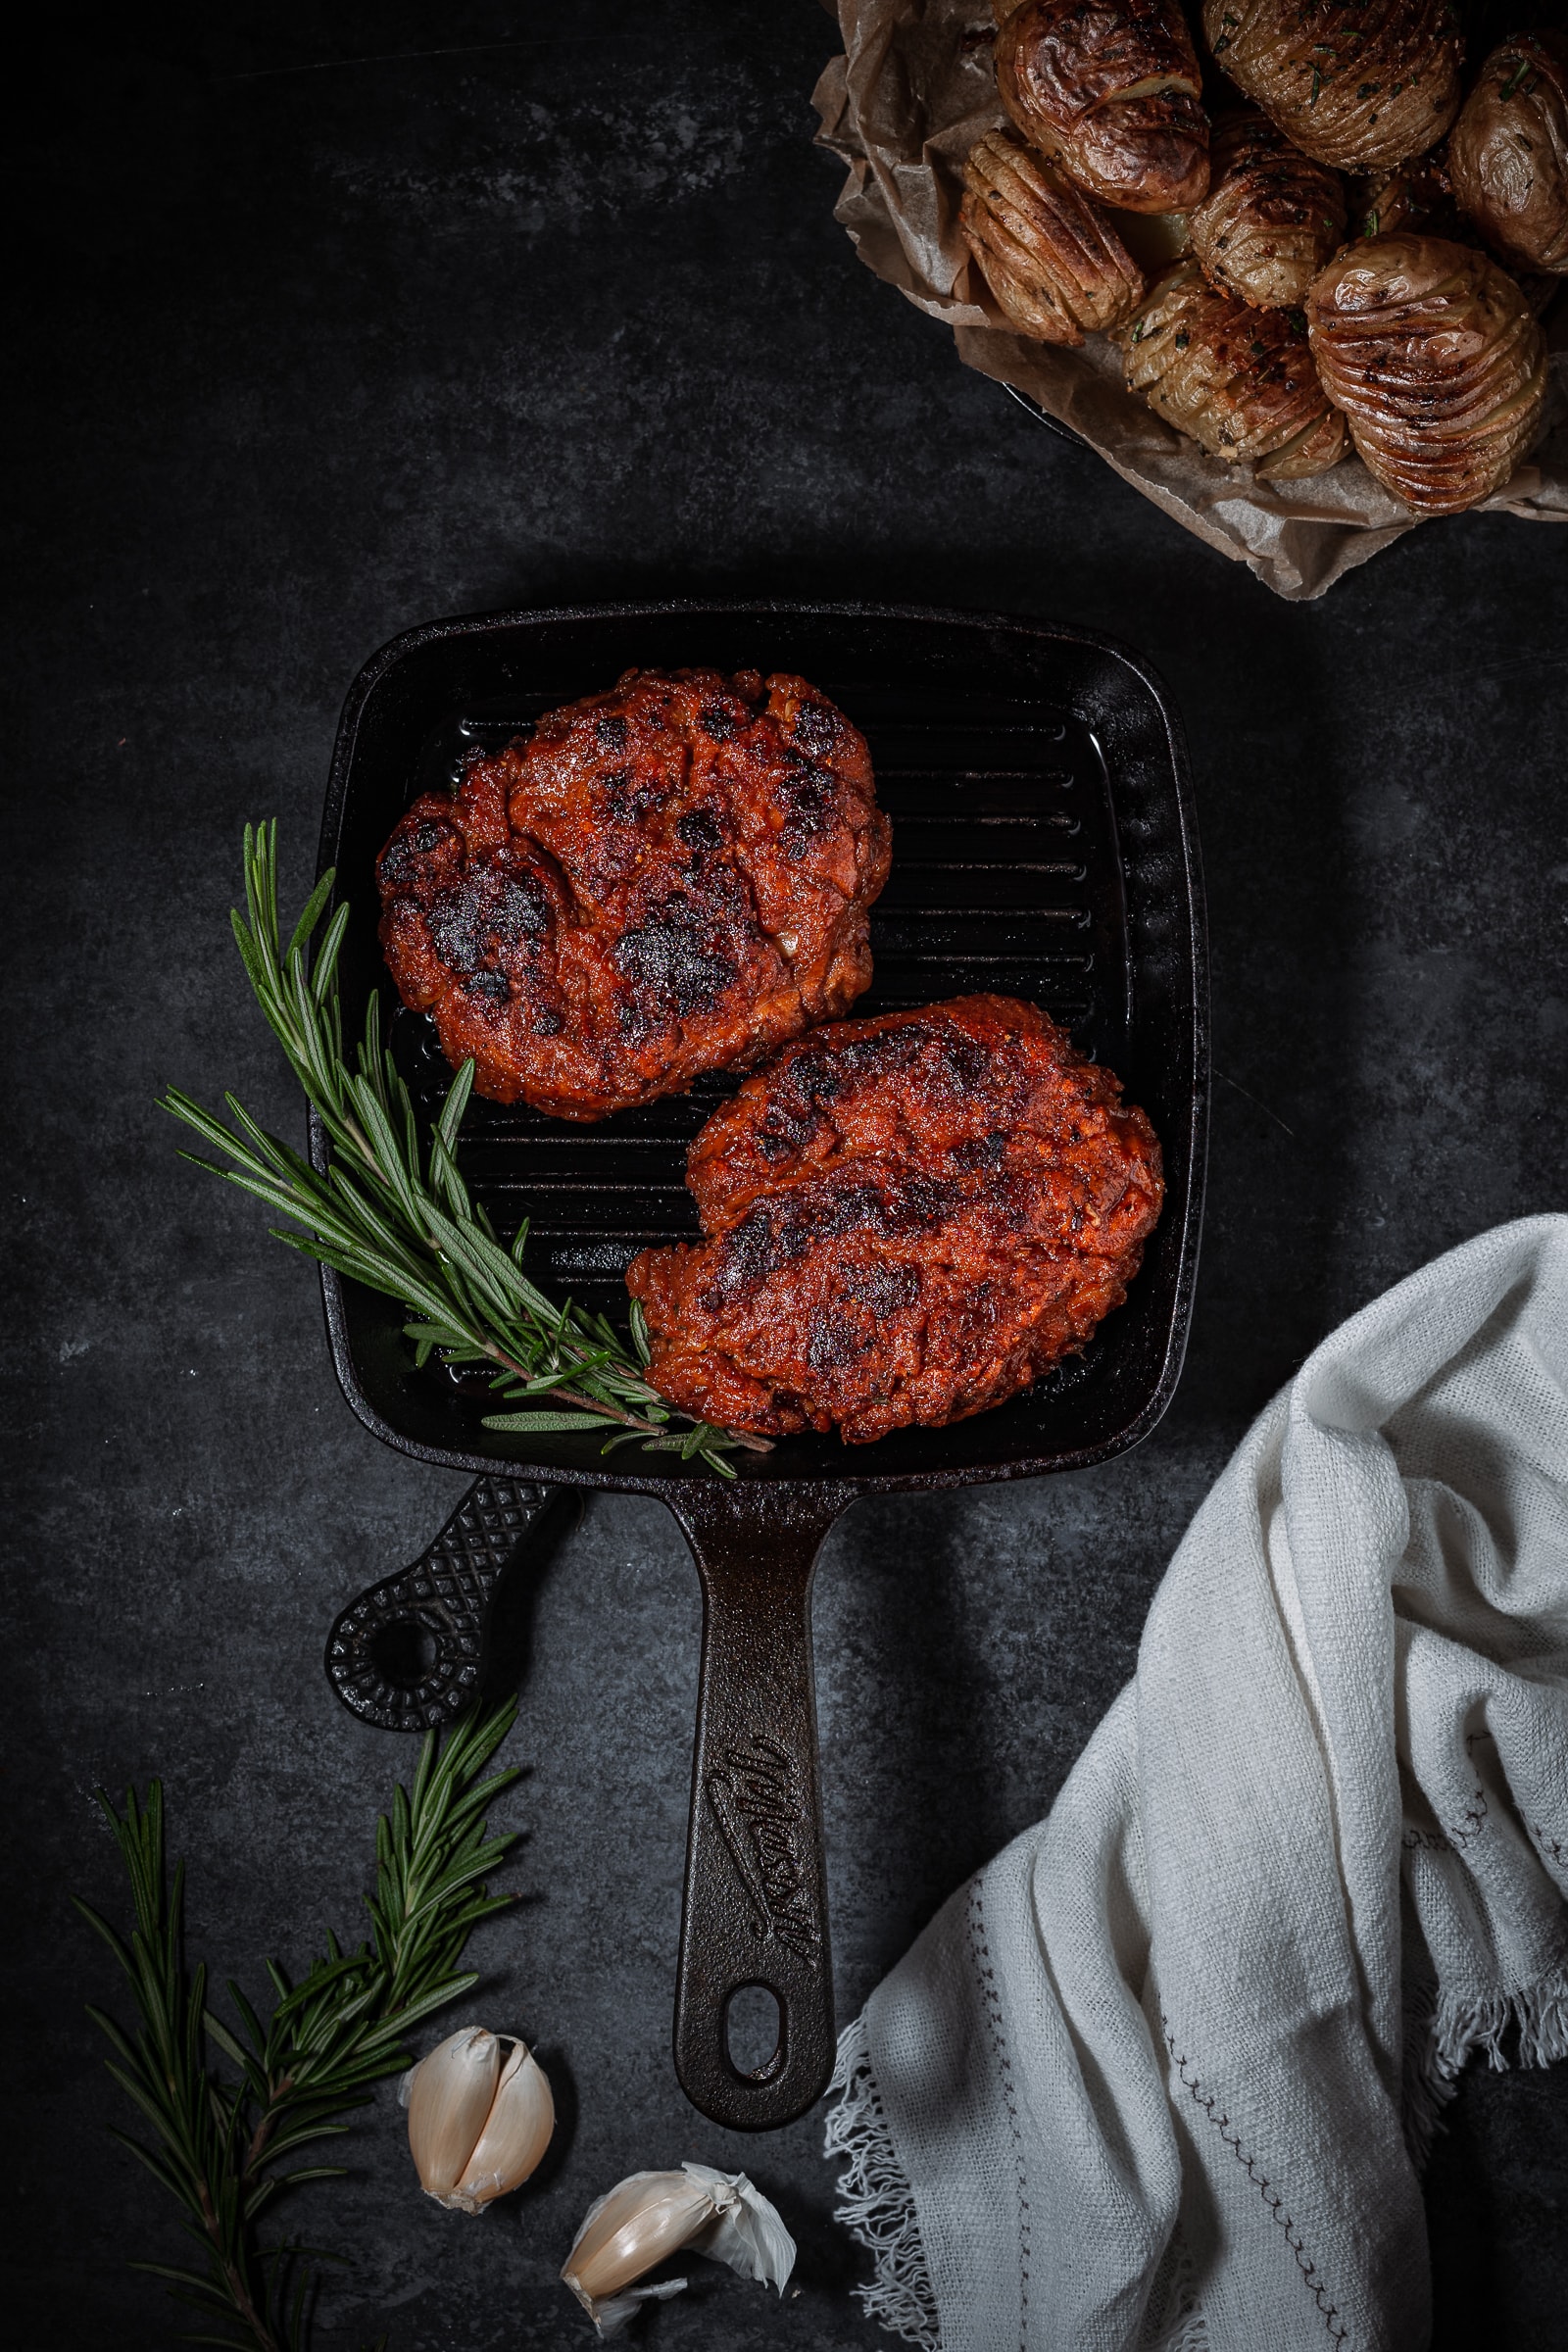 Vegan steak on a grill pan with rosemary garnish.